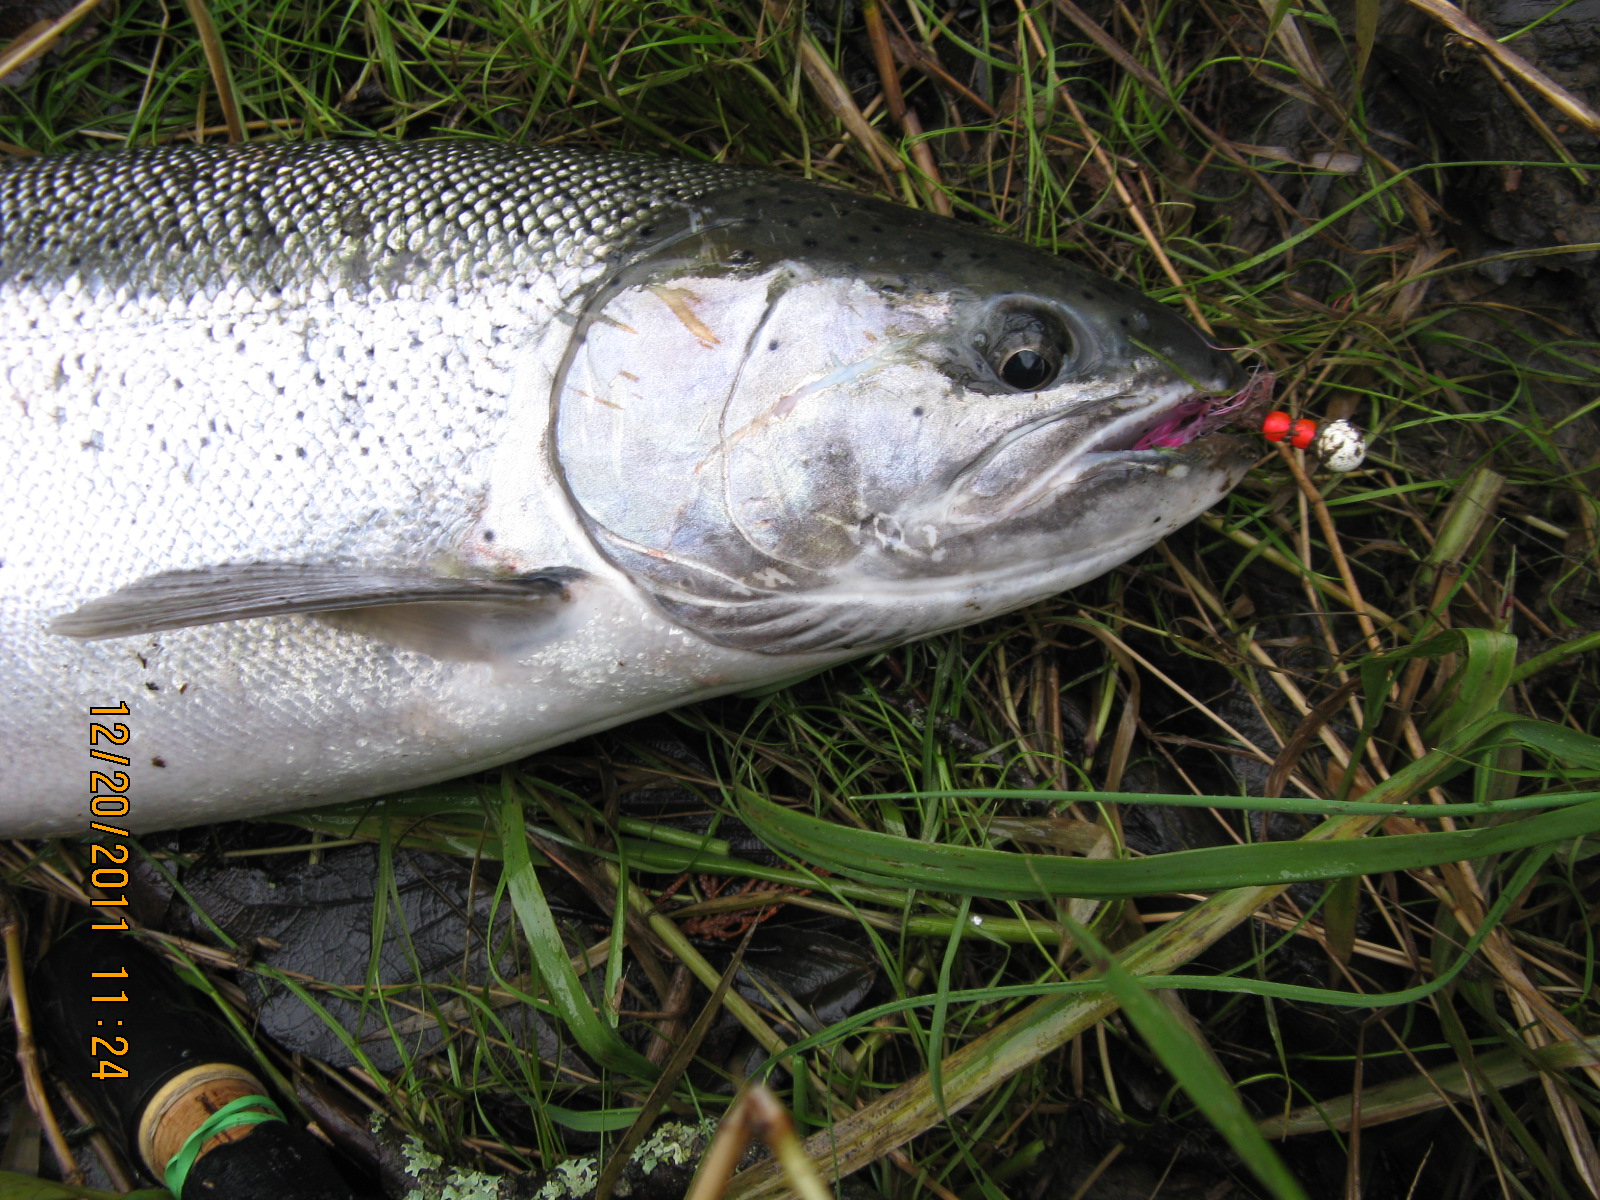 Forever Fishing Washington State: Salmon and Steelhead Anyone?